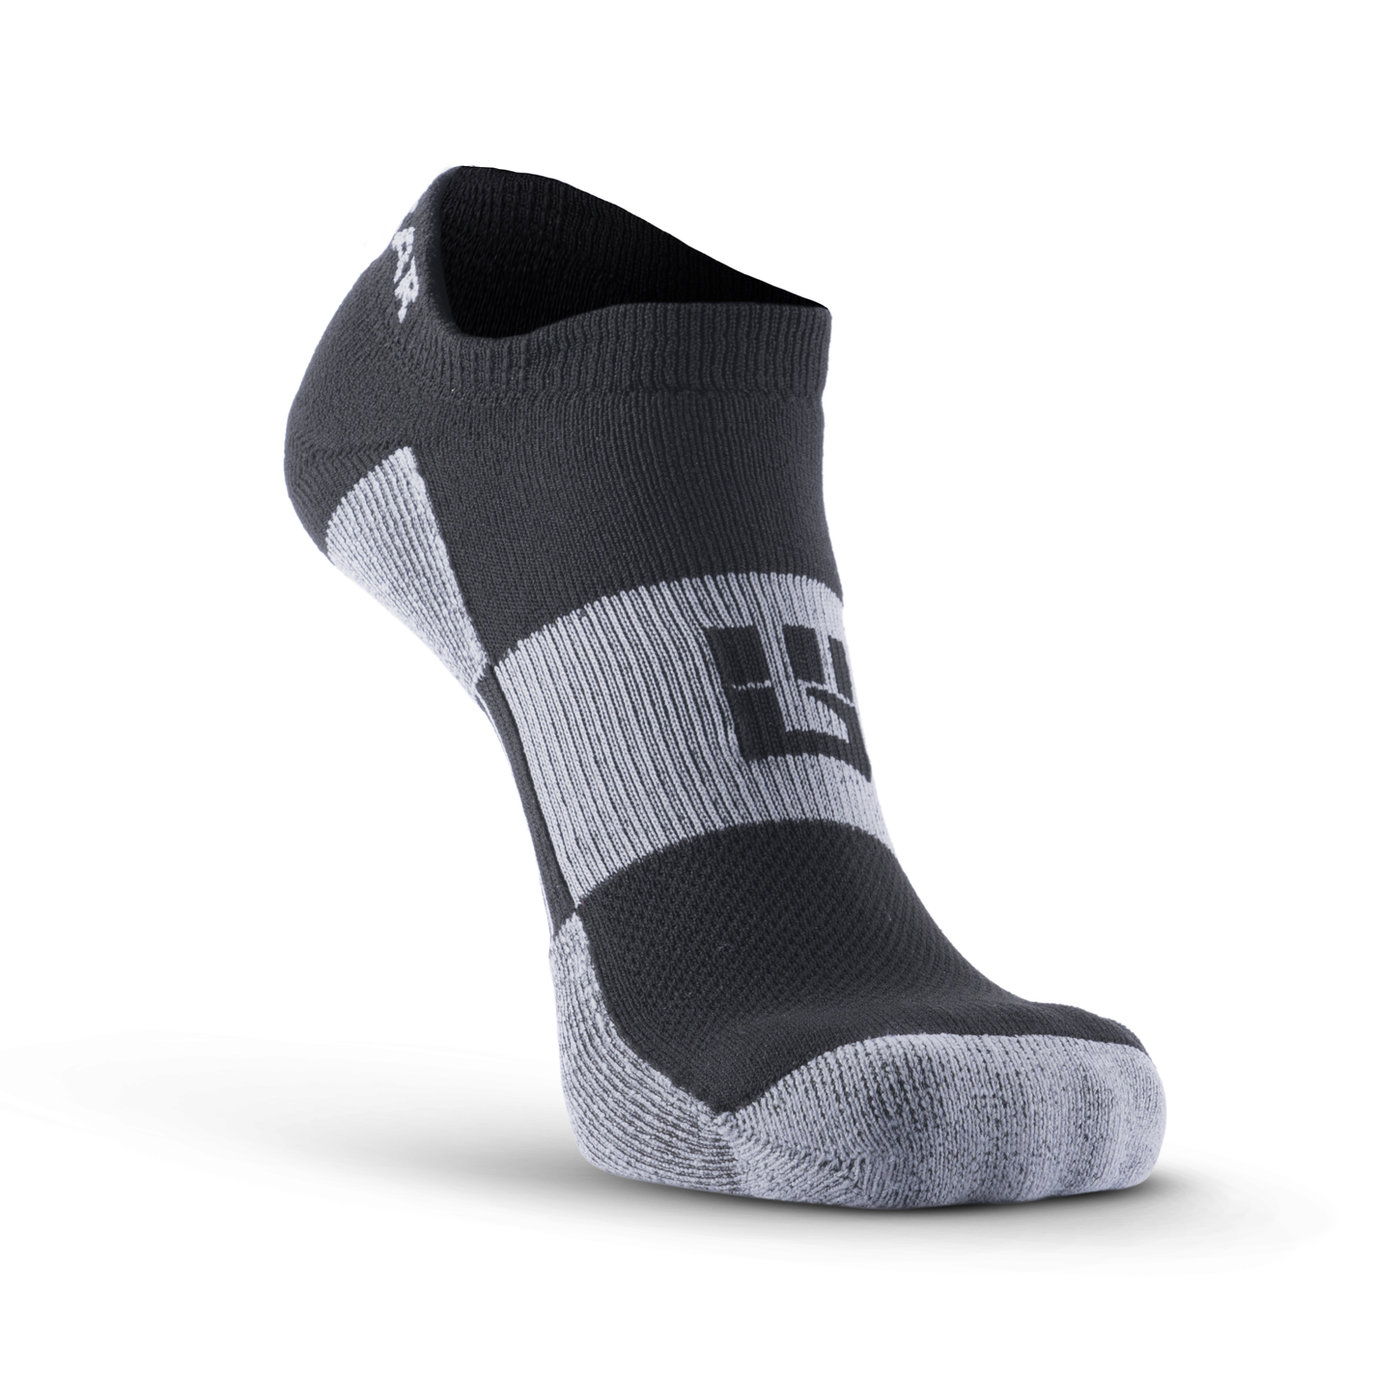 No-Show Running Socks - Black/Gray (2 Pair Pack)